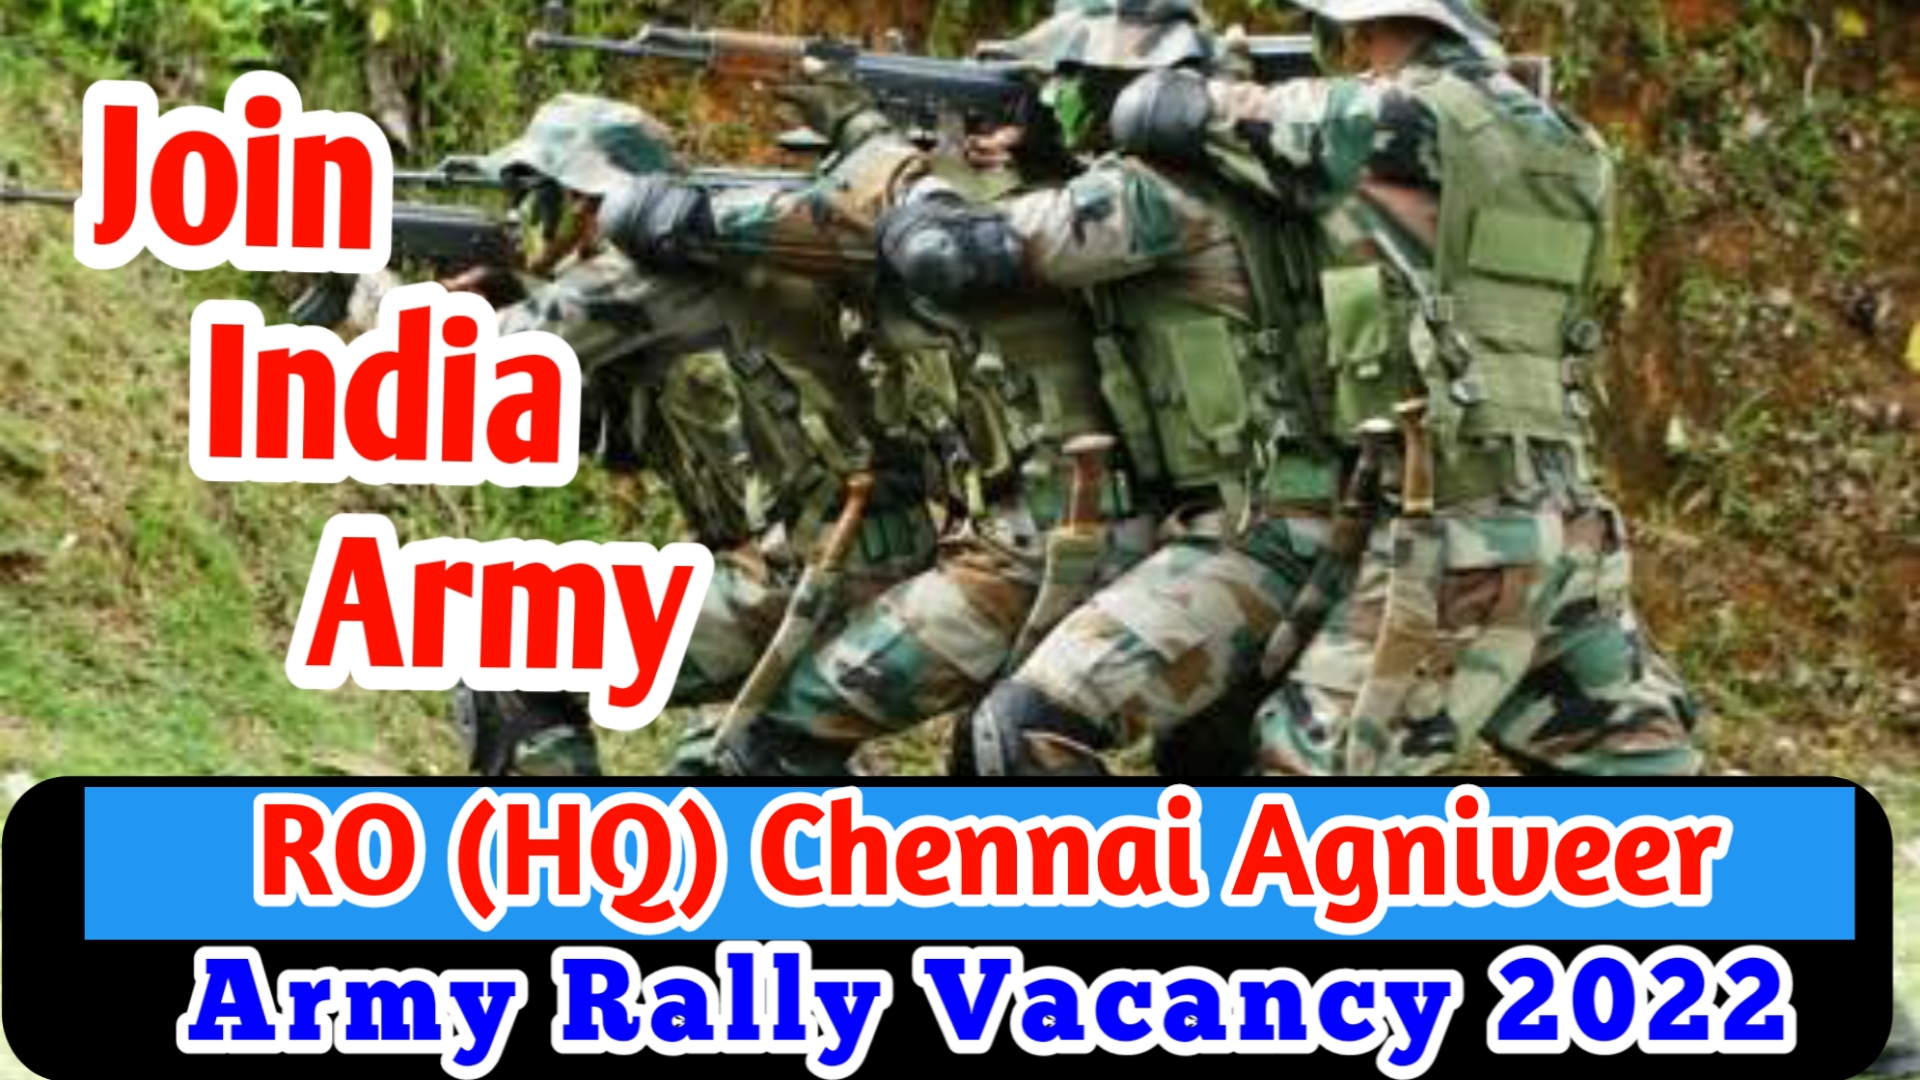 RO (HQ), Chennai Agniveer Army Rally Vacancy 2022